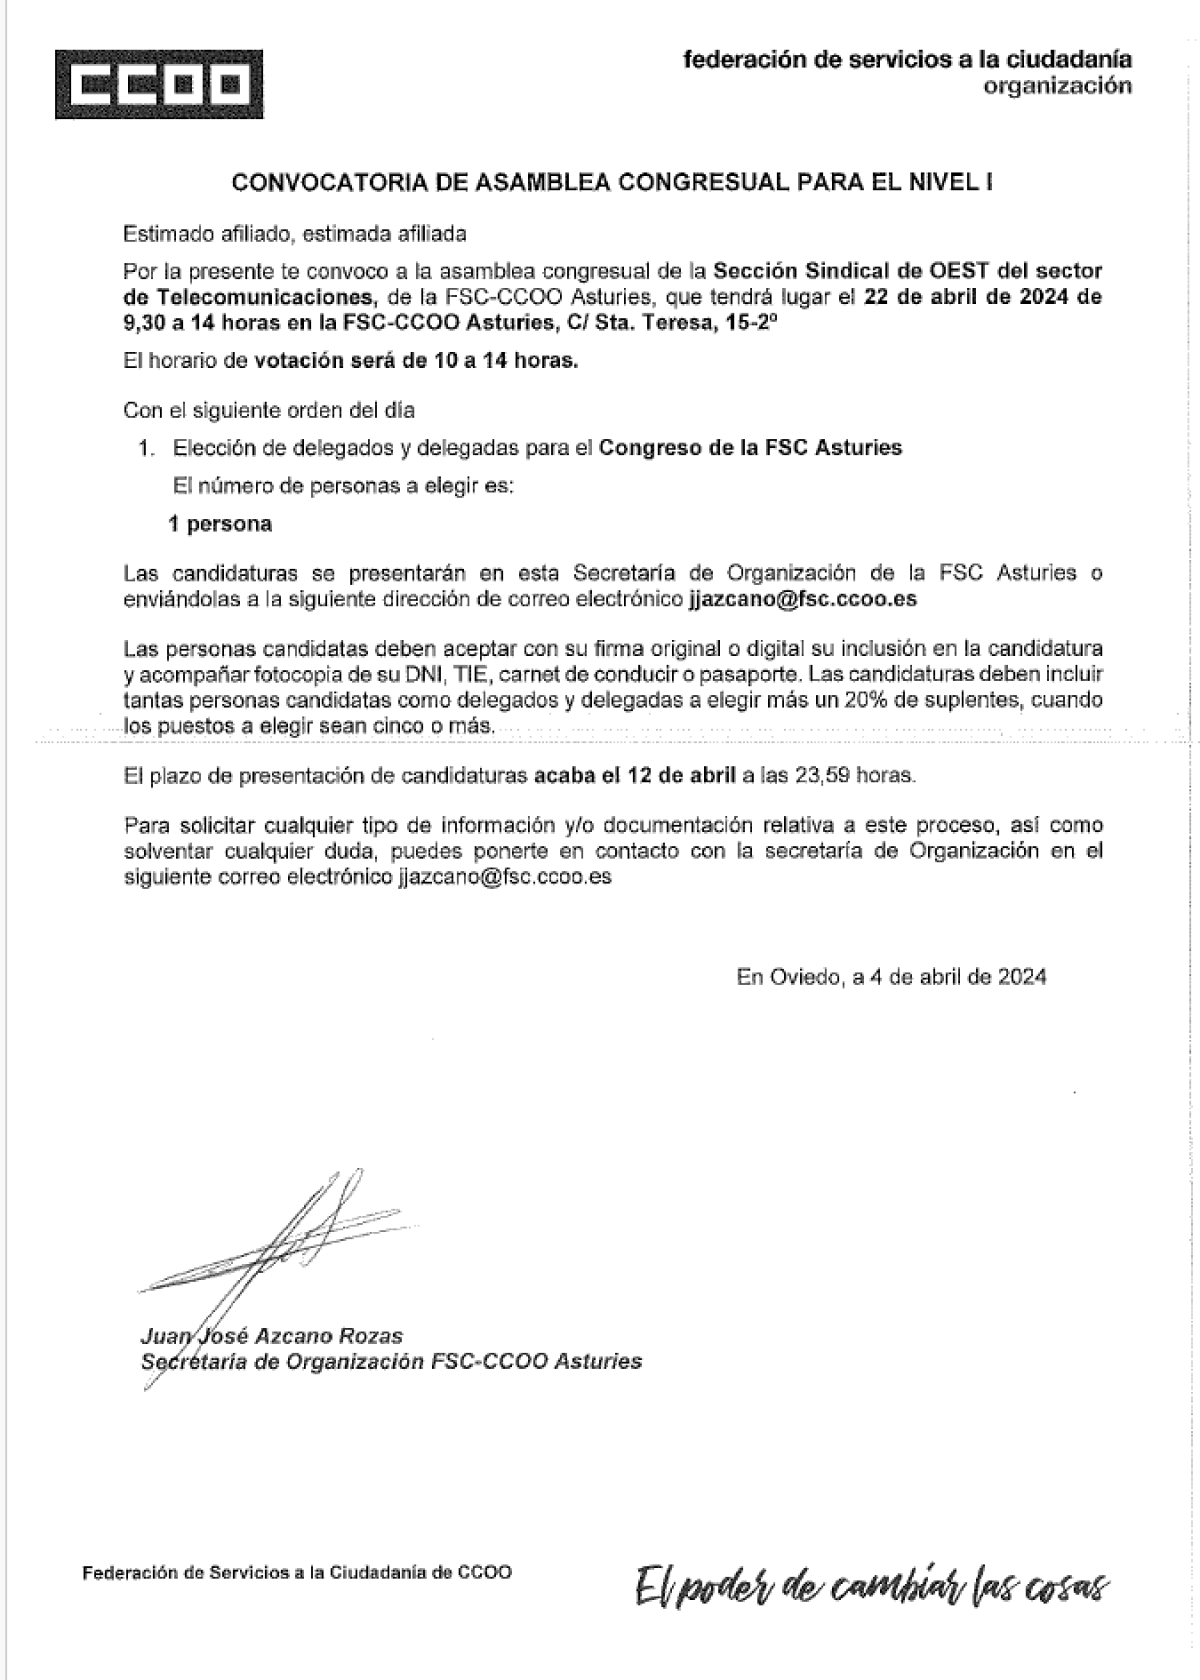 Asamblea Congresual. Congreso FSC Asturias. Sector Telecomunicaciones OEST